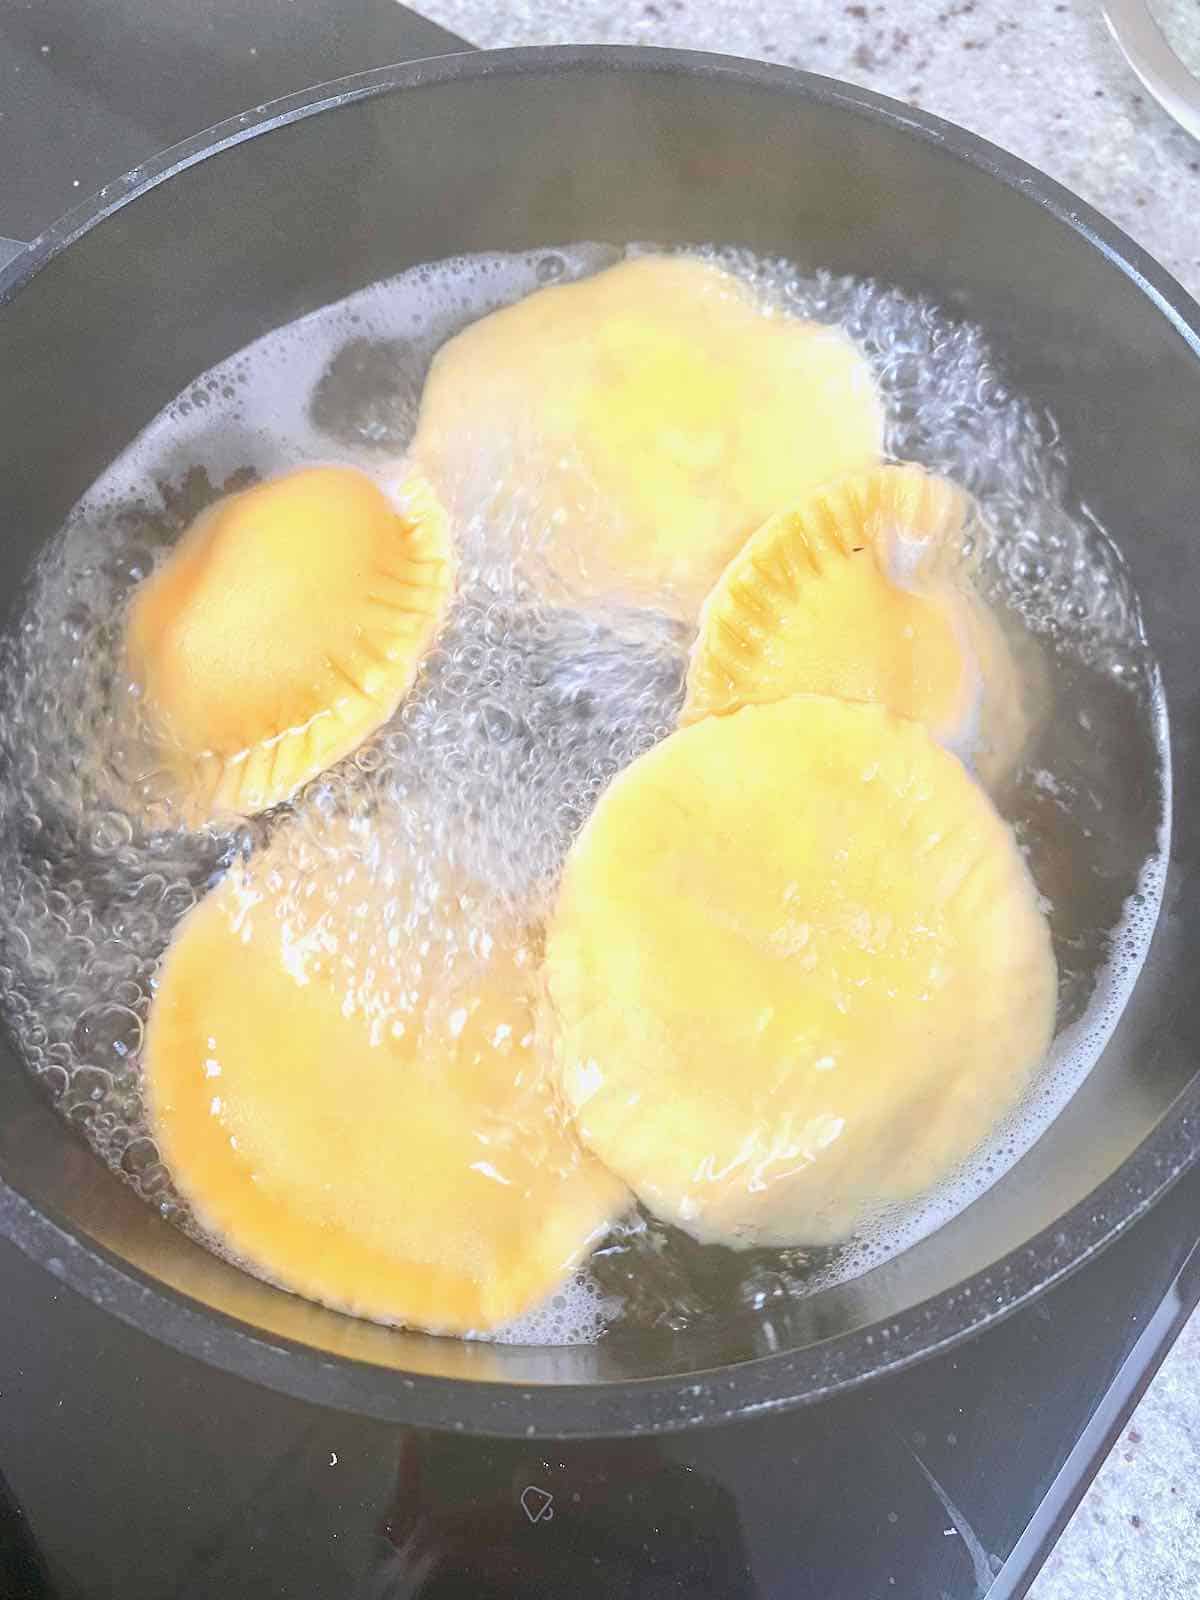 Boiling ravioli in a pot